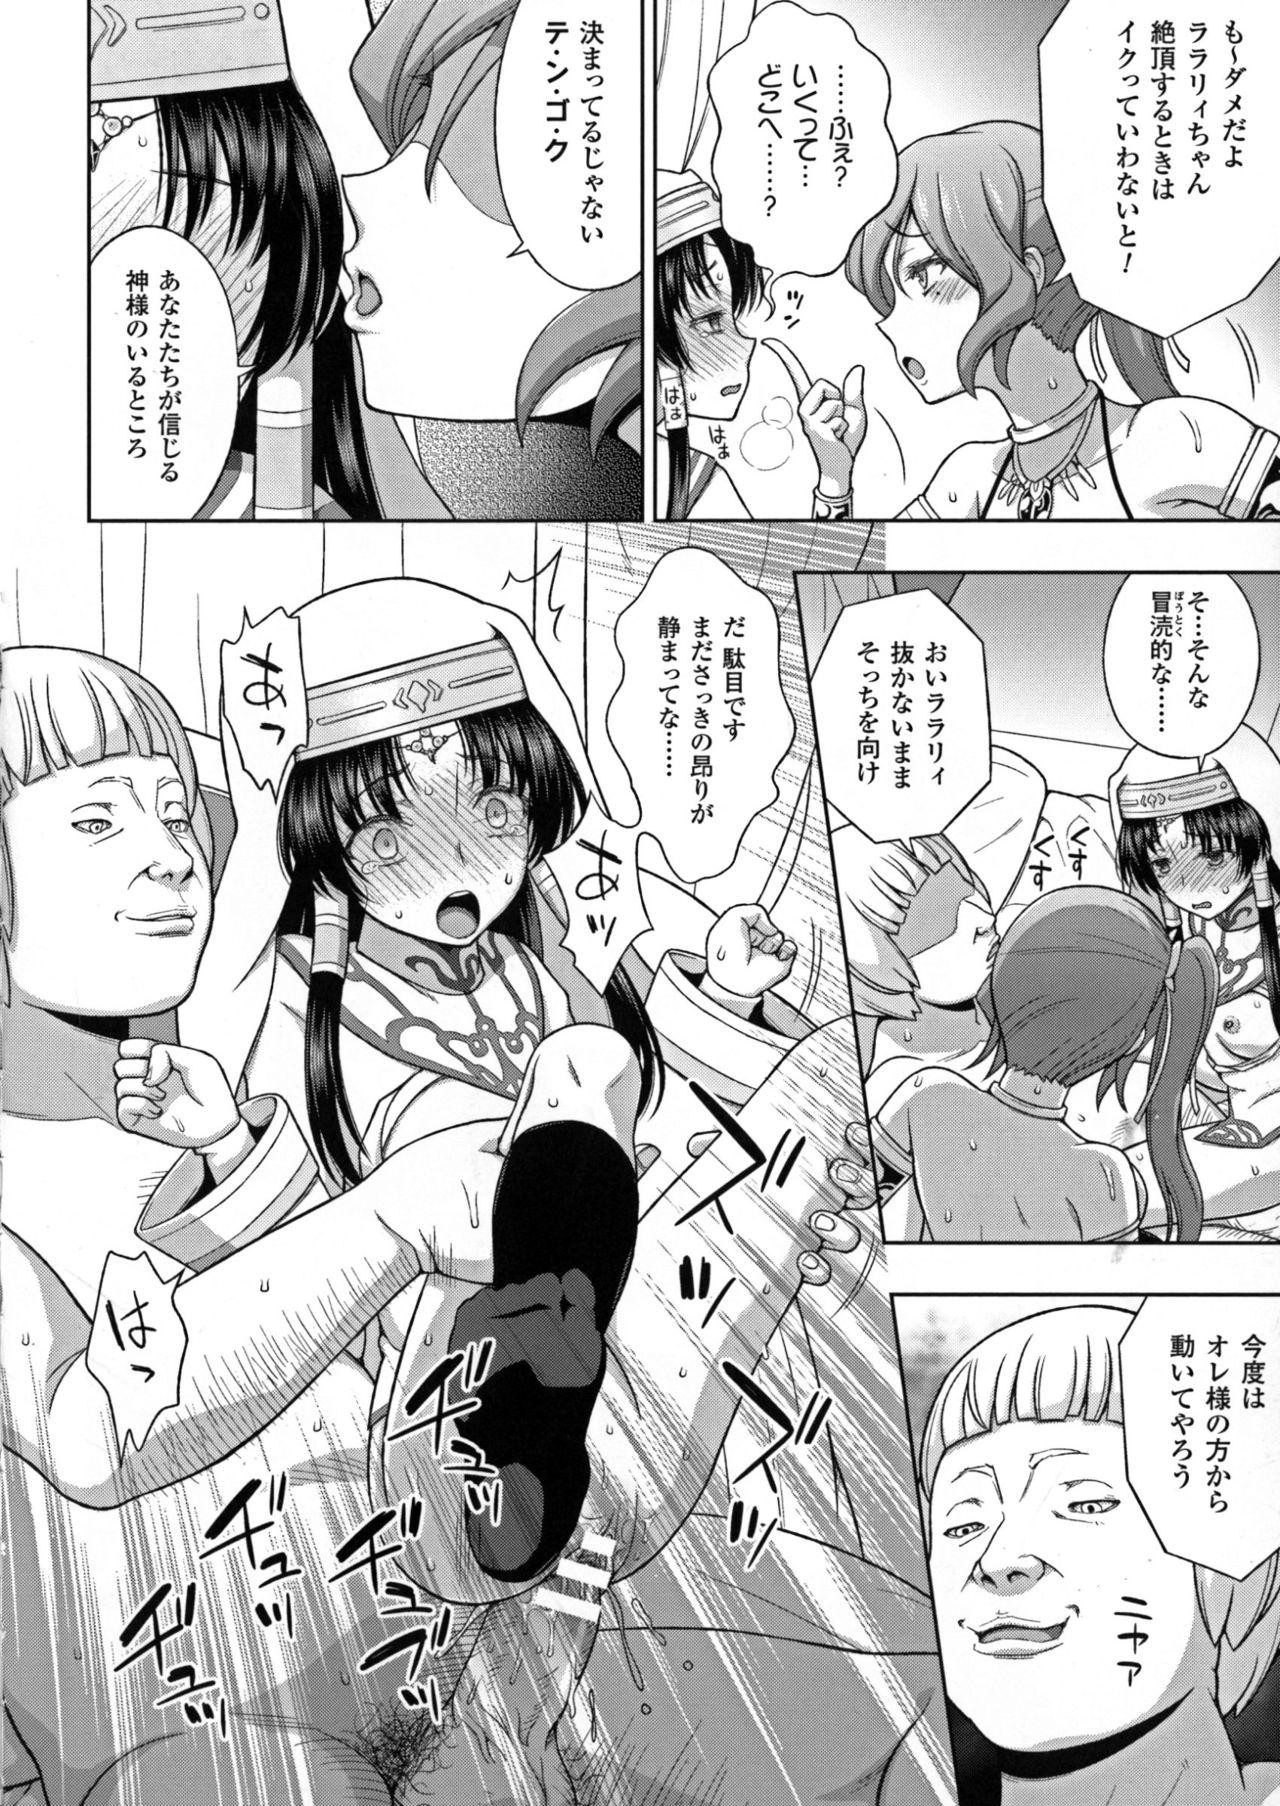 Seigi no Heroine Kangoku File DX Vol. 7 48